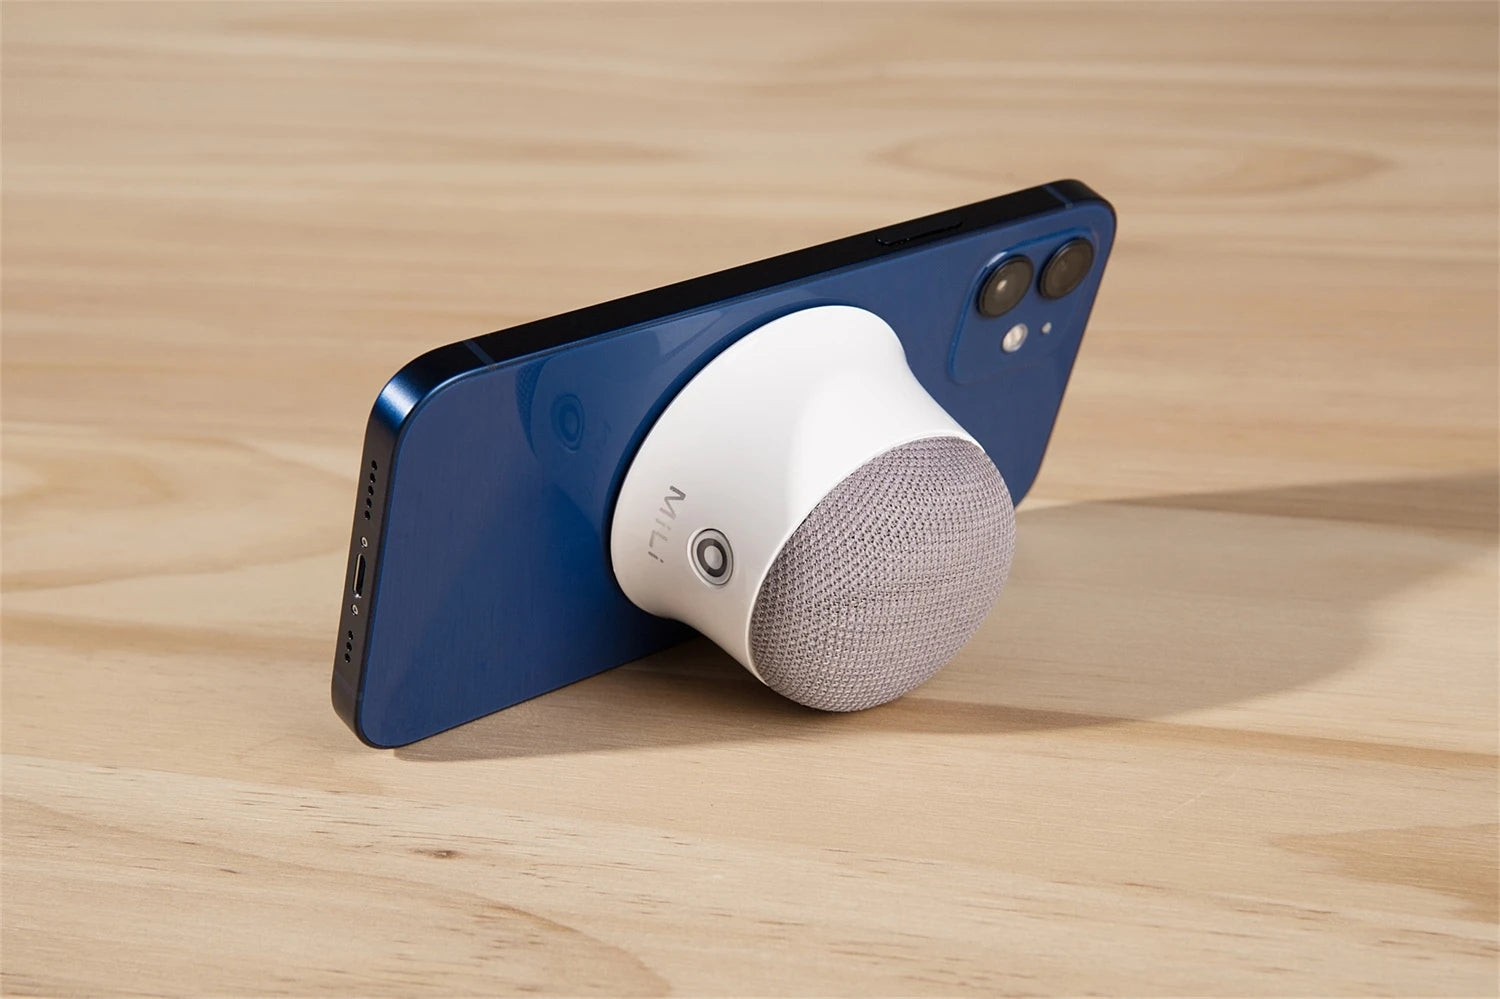 MiLi Mag Soundmate Mini MagSafe Bluetooth Speaker - White